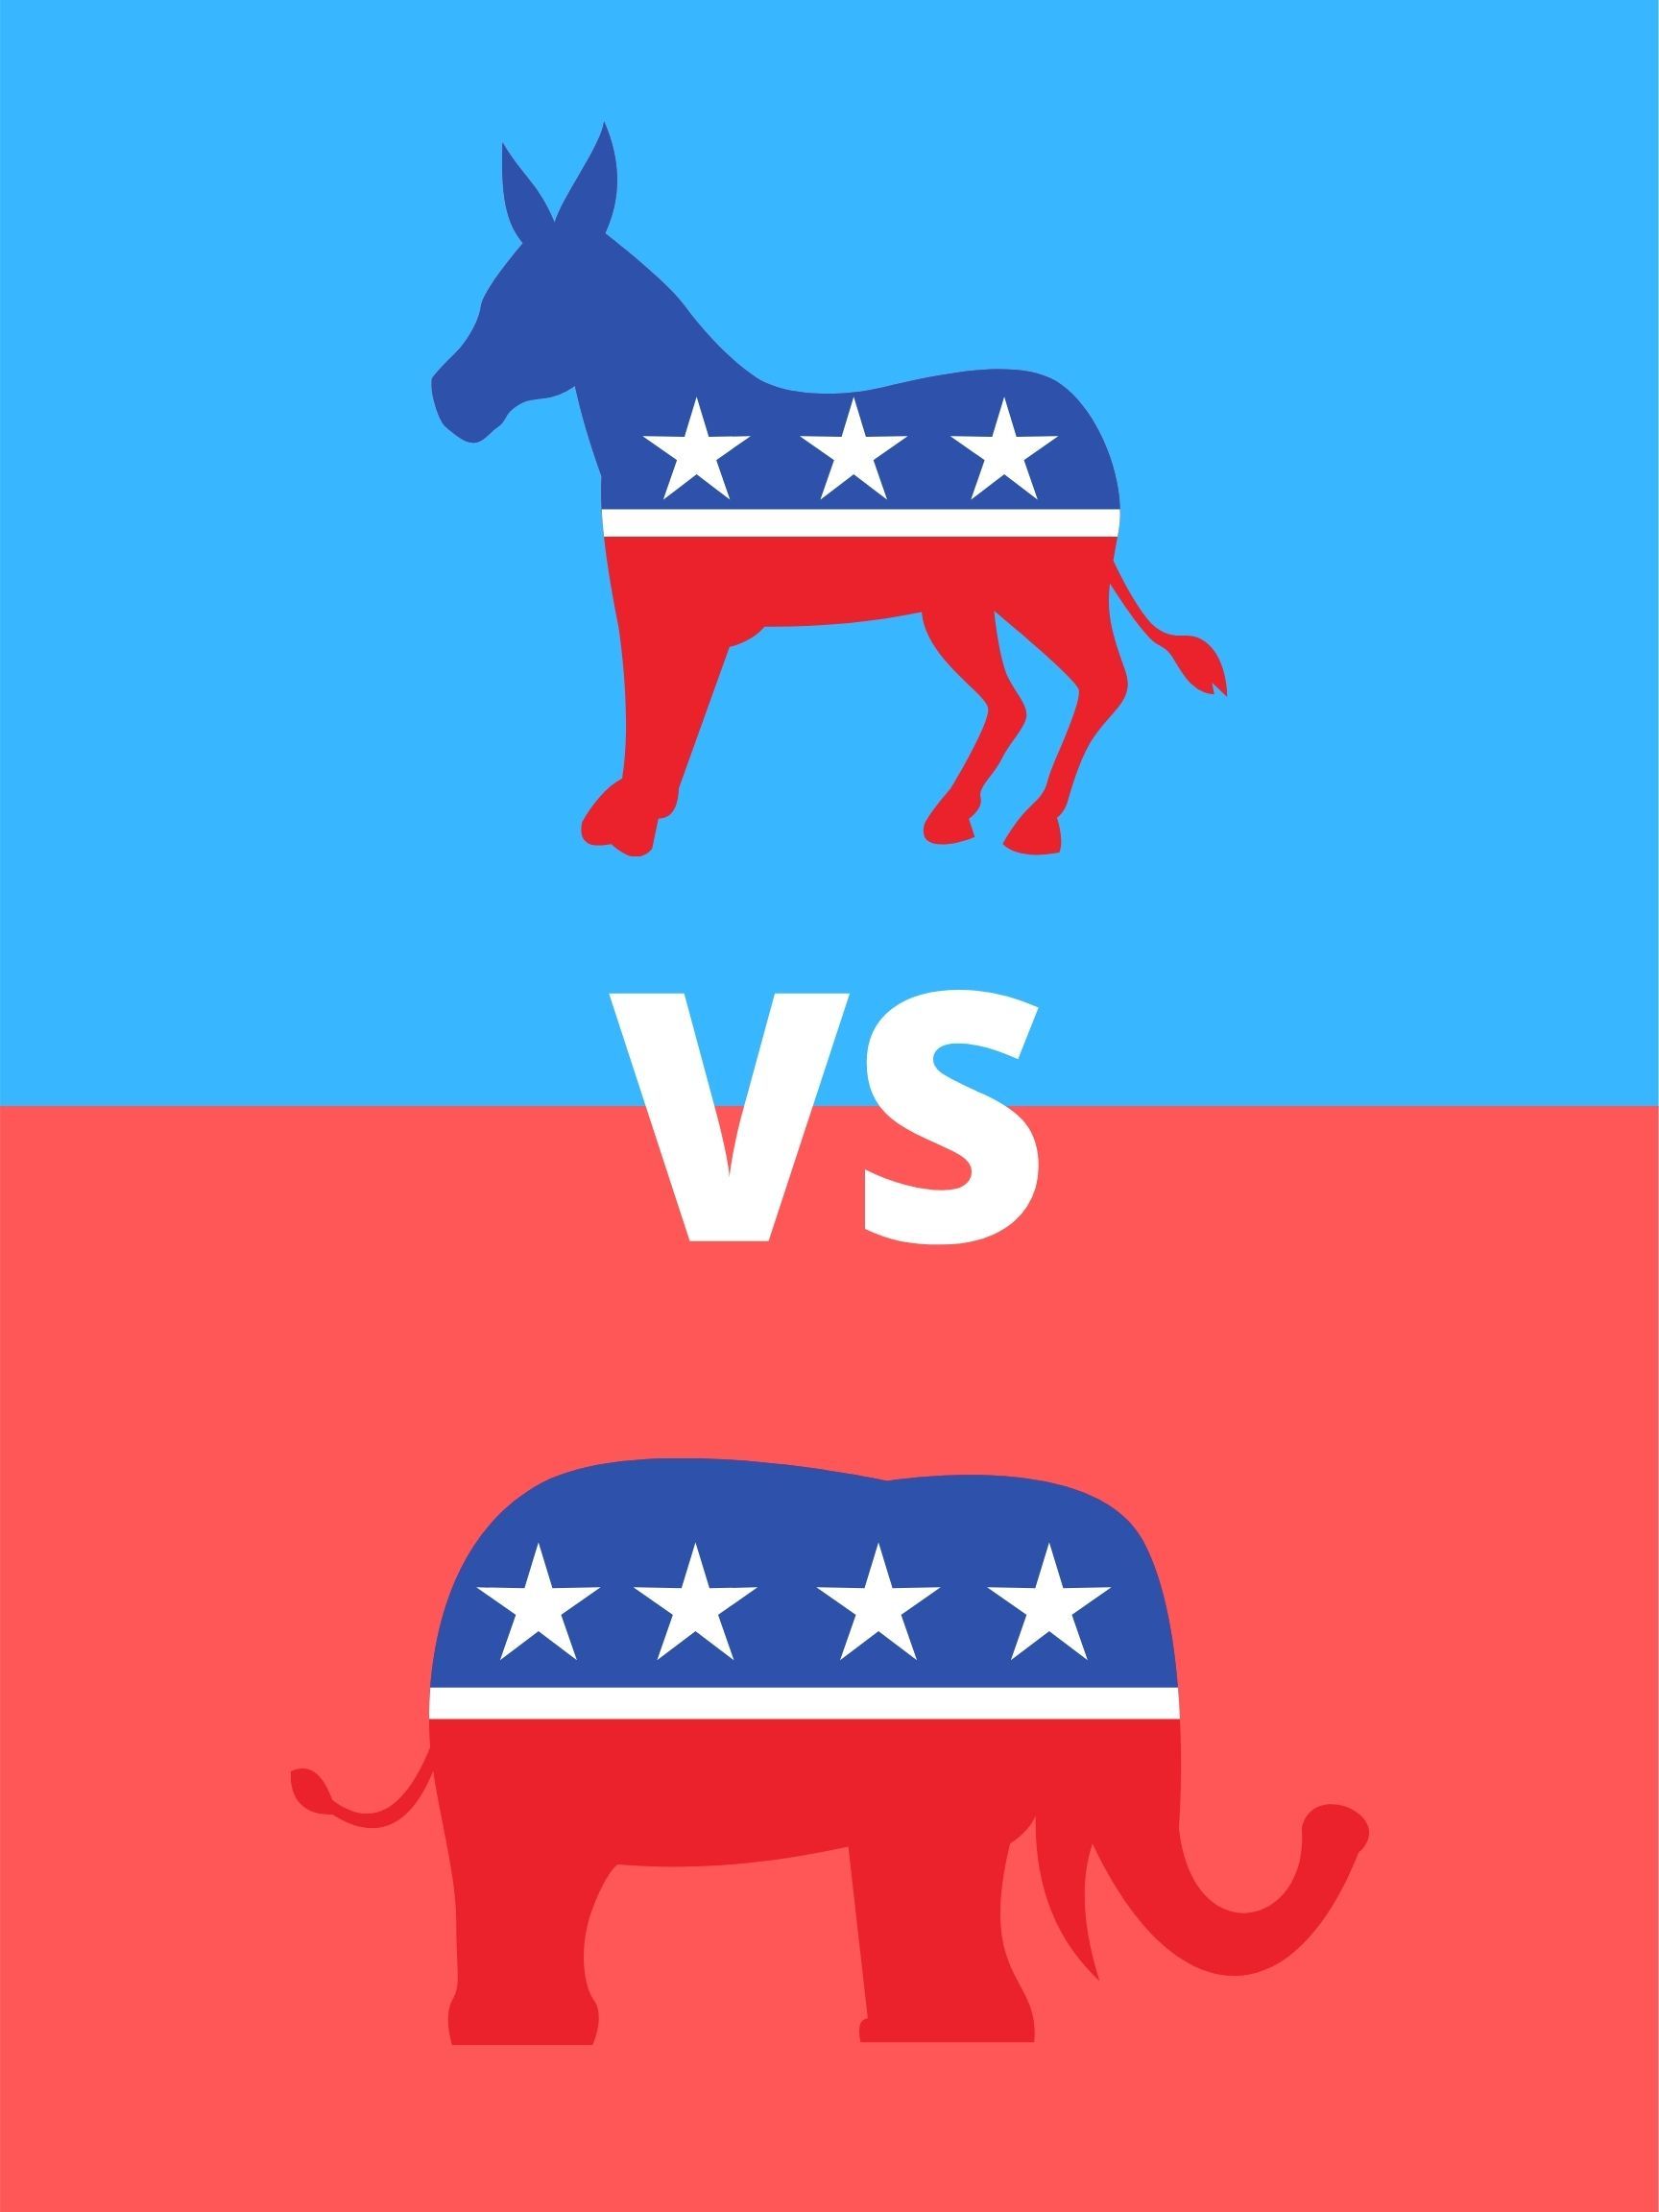 Democrat Party vs Republican Party 
Graphic by Gabrielle Cellucci